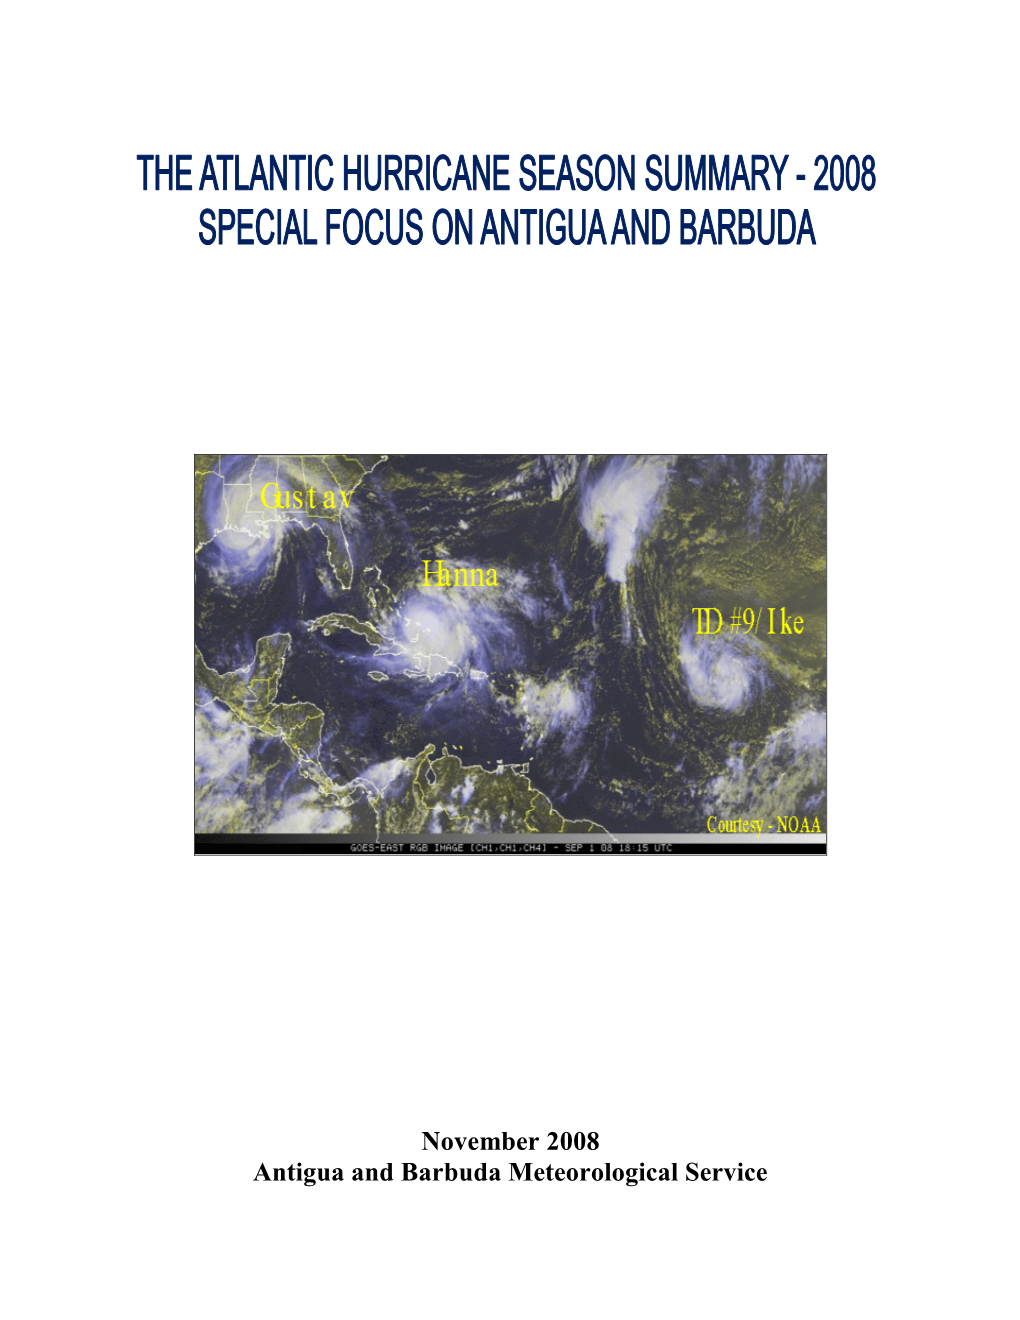 Ovember 2008 Antigua and Barbuda Meteorological Service